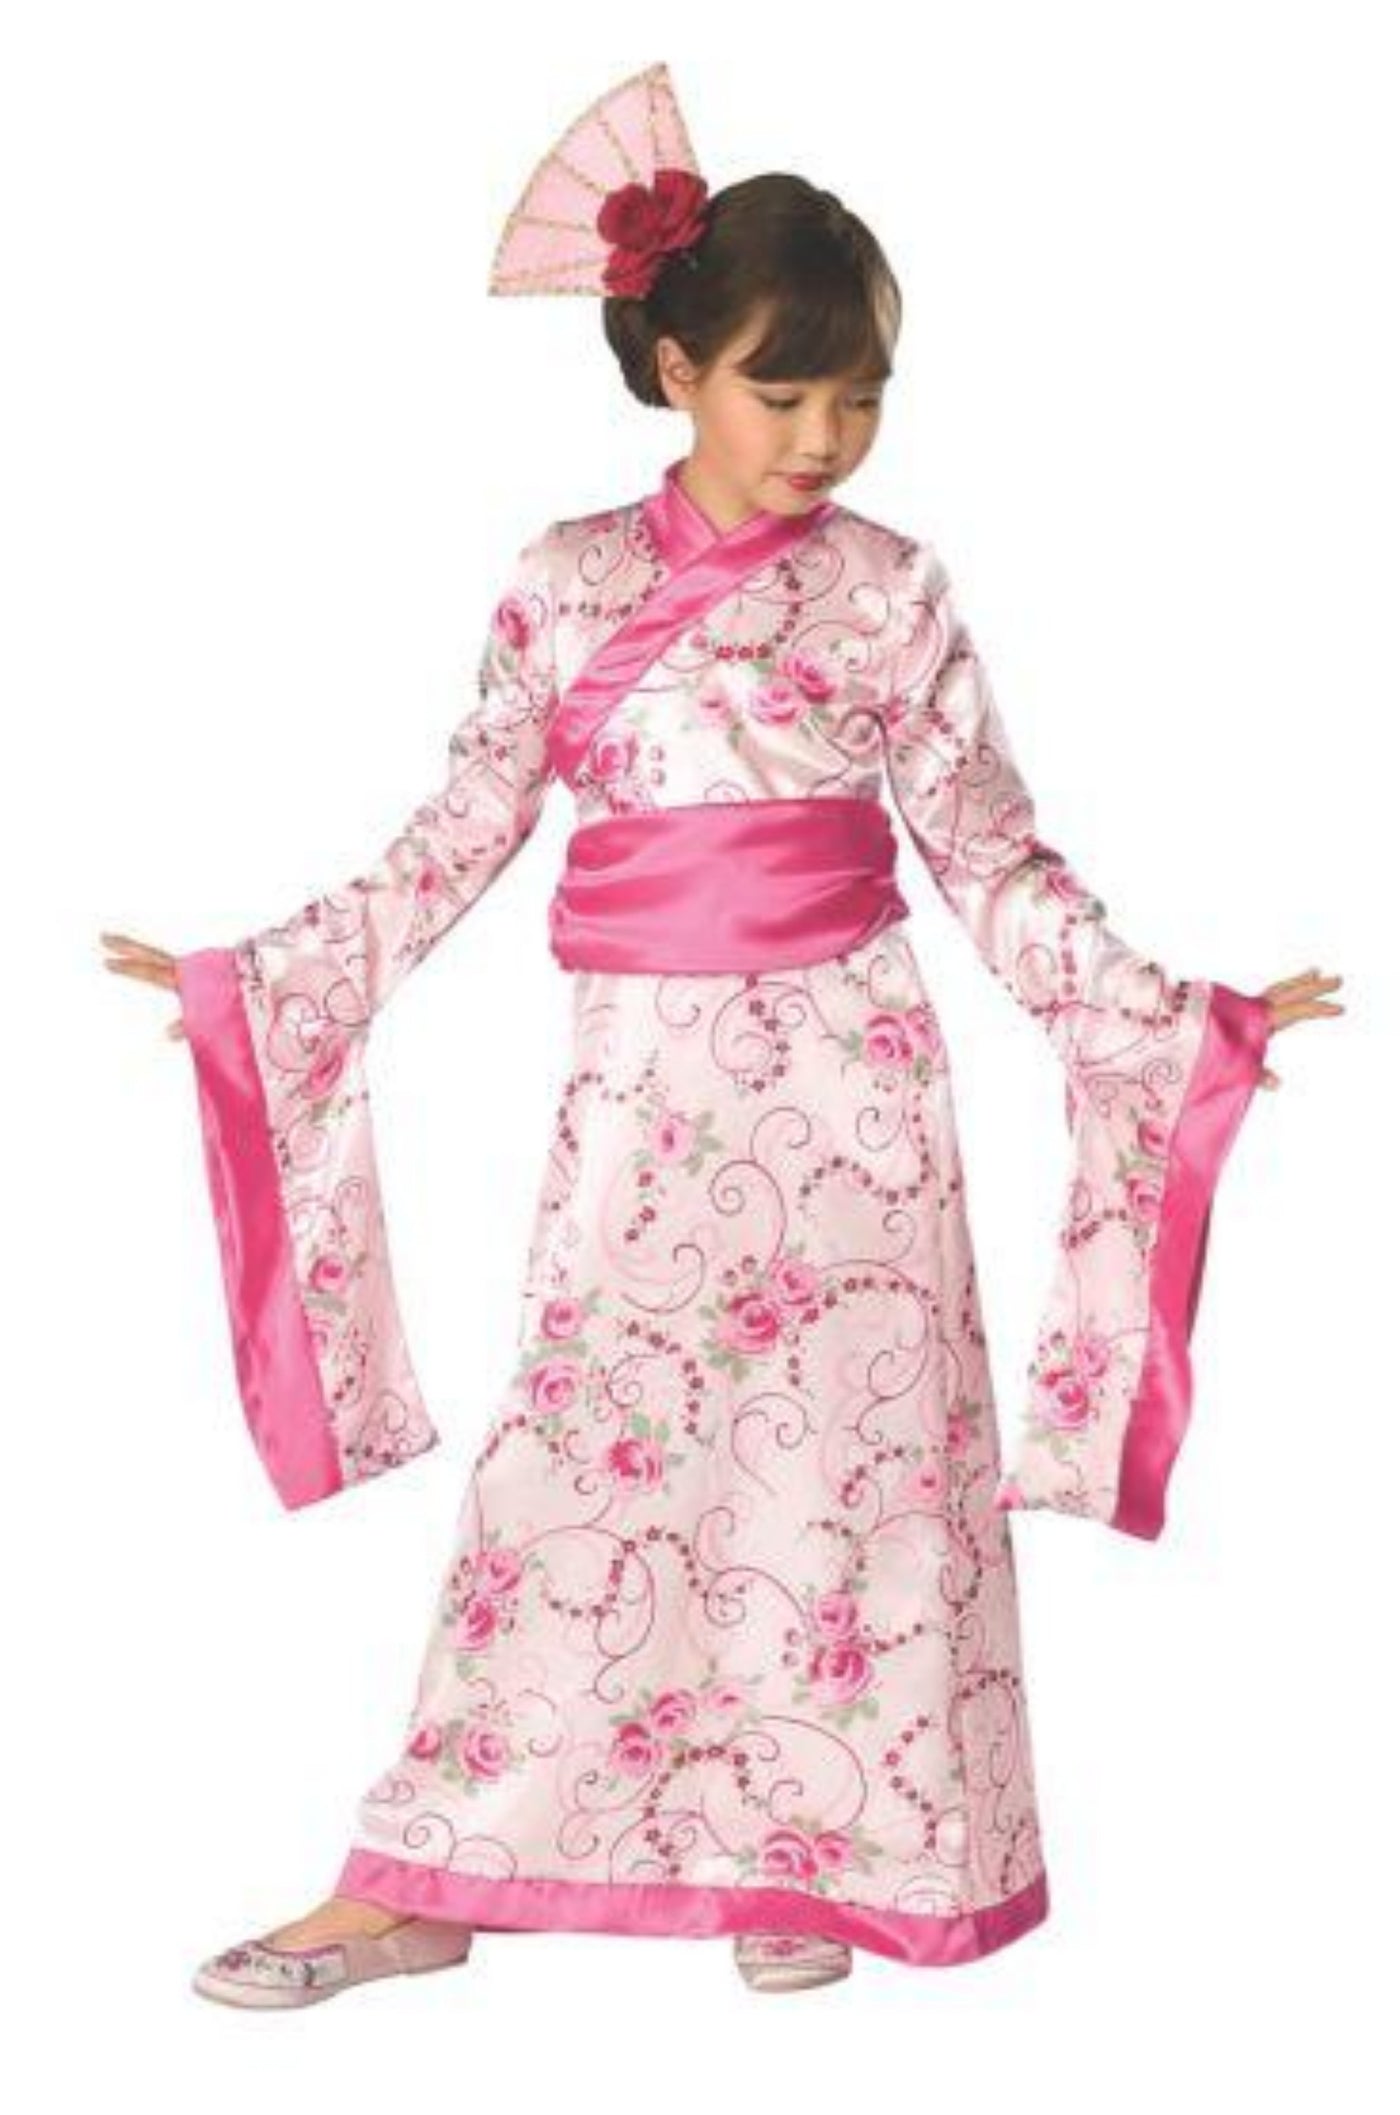 Kids Asian Princess Costume